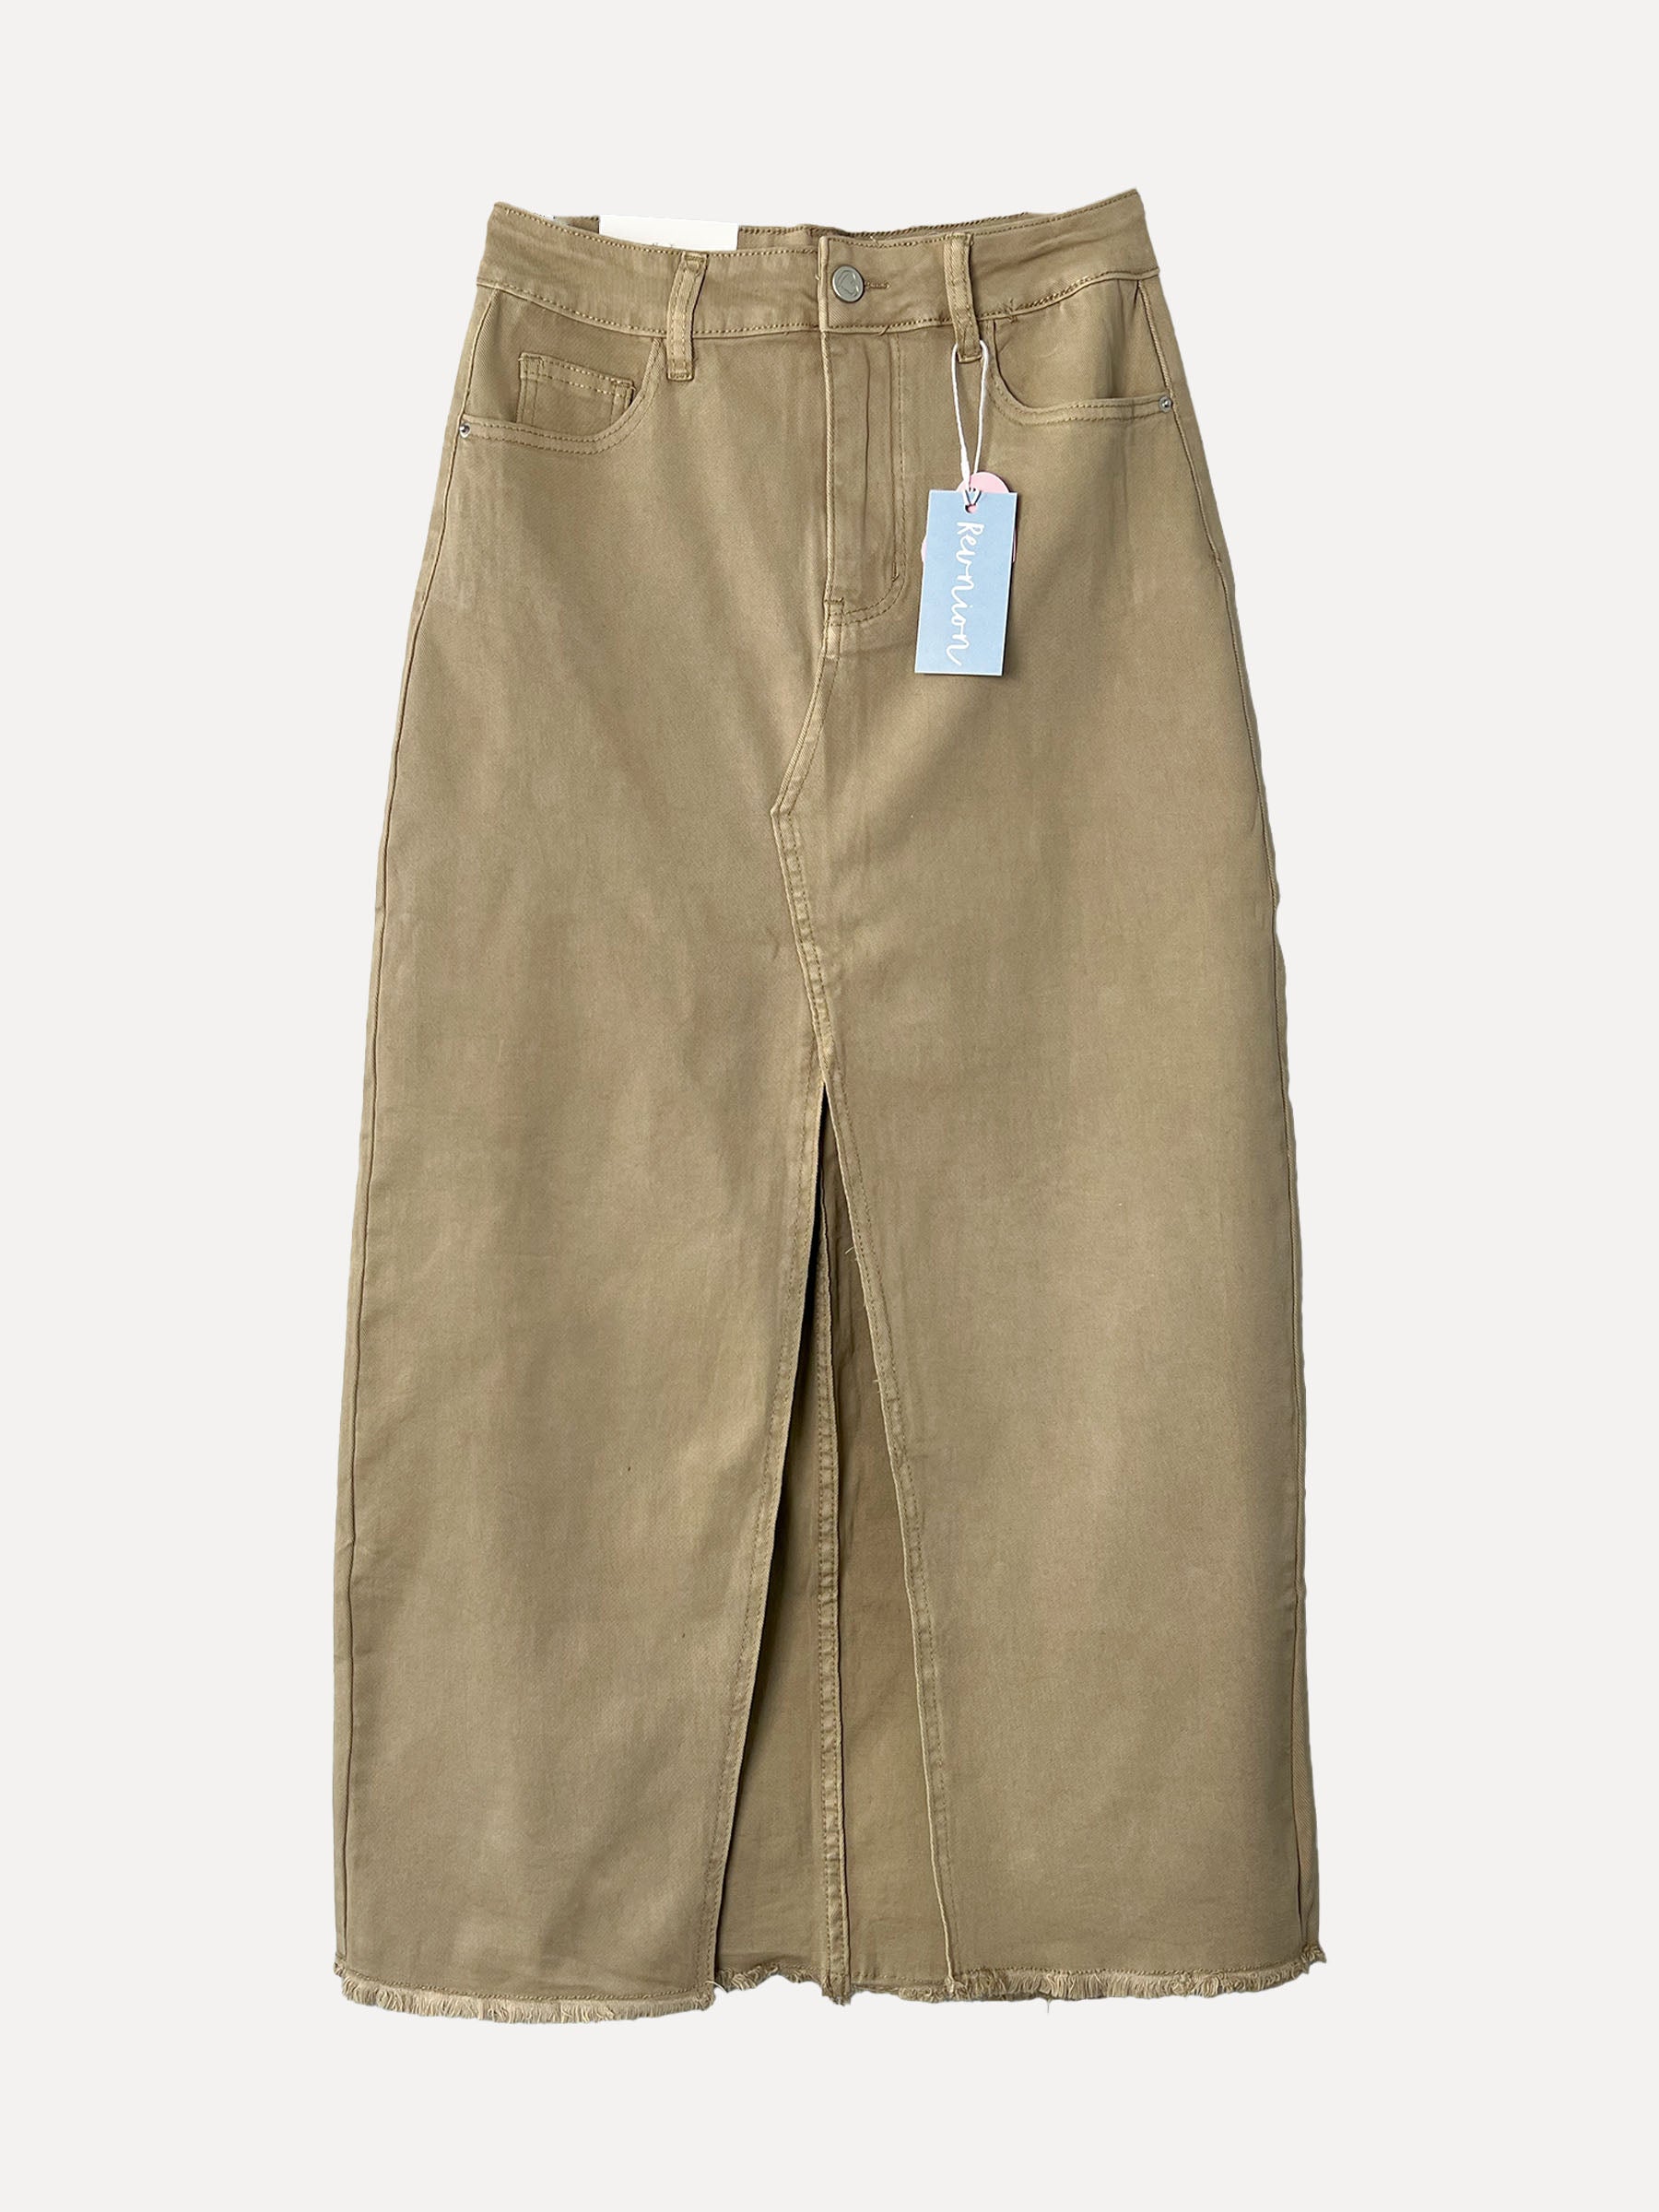 Jeans Skirt F6876, Beige